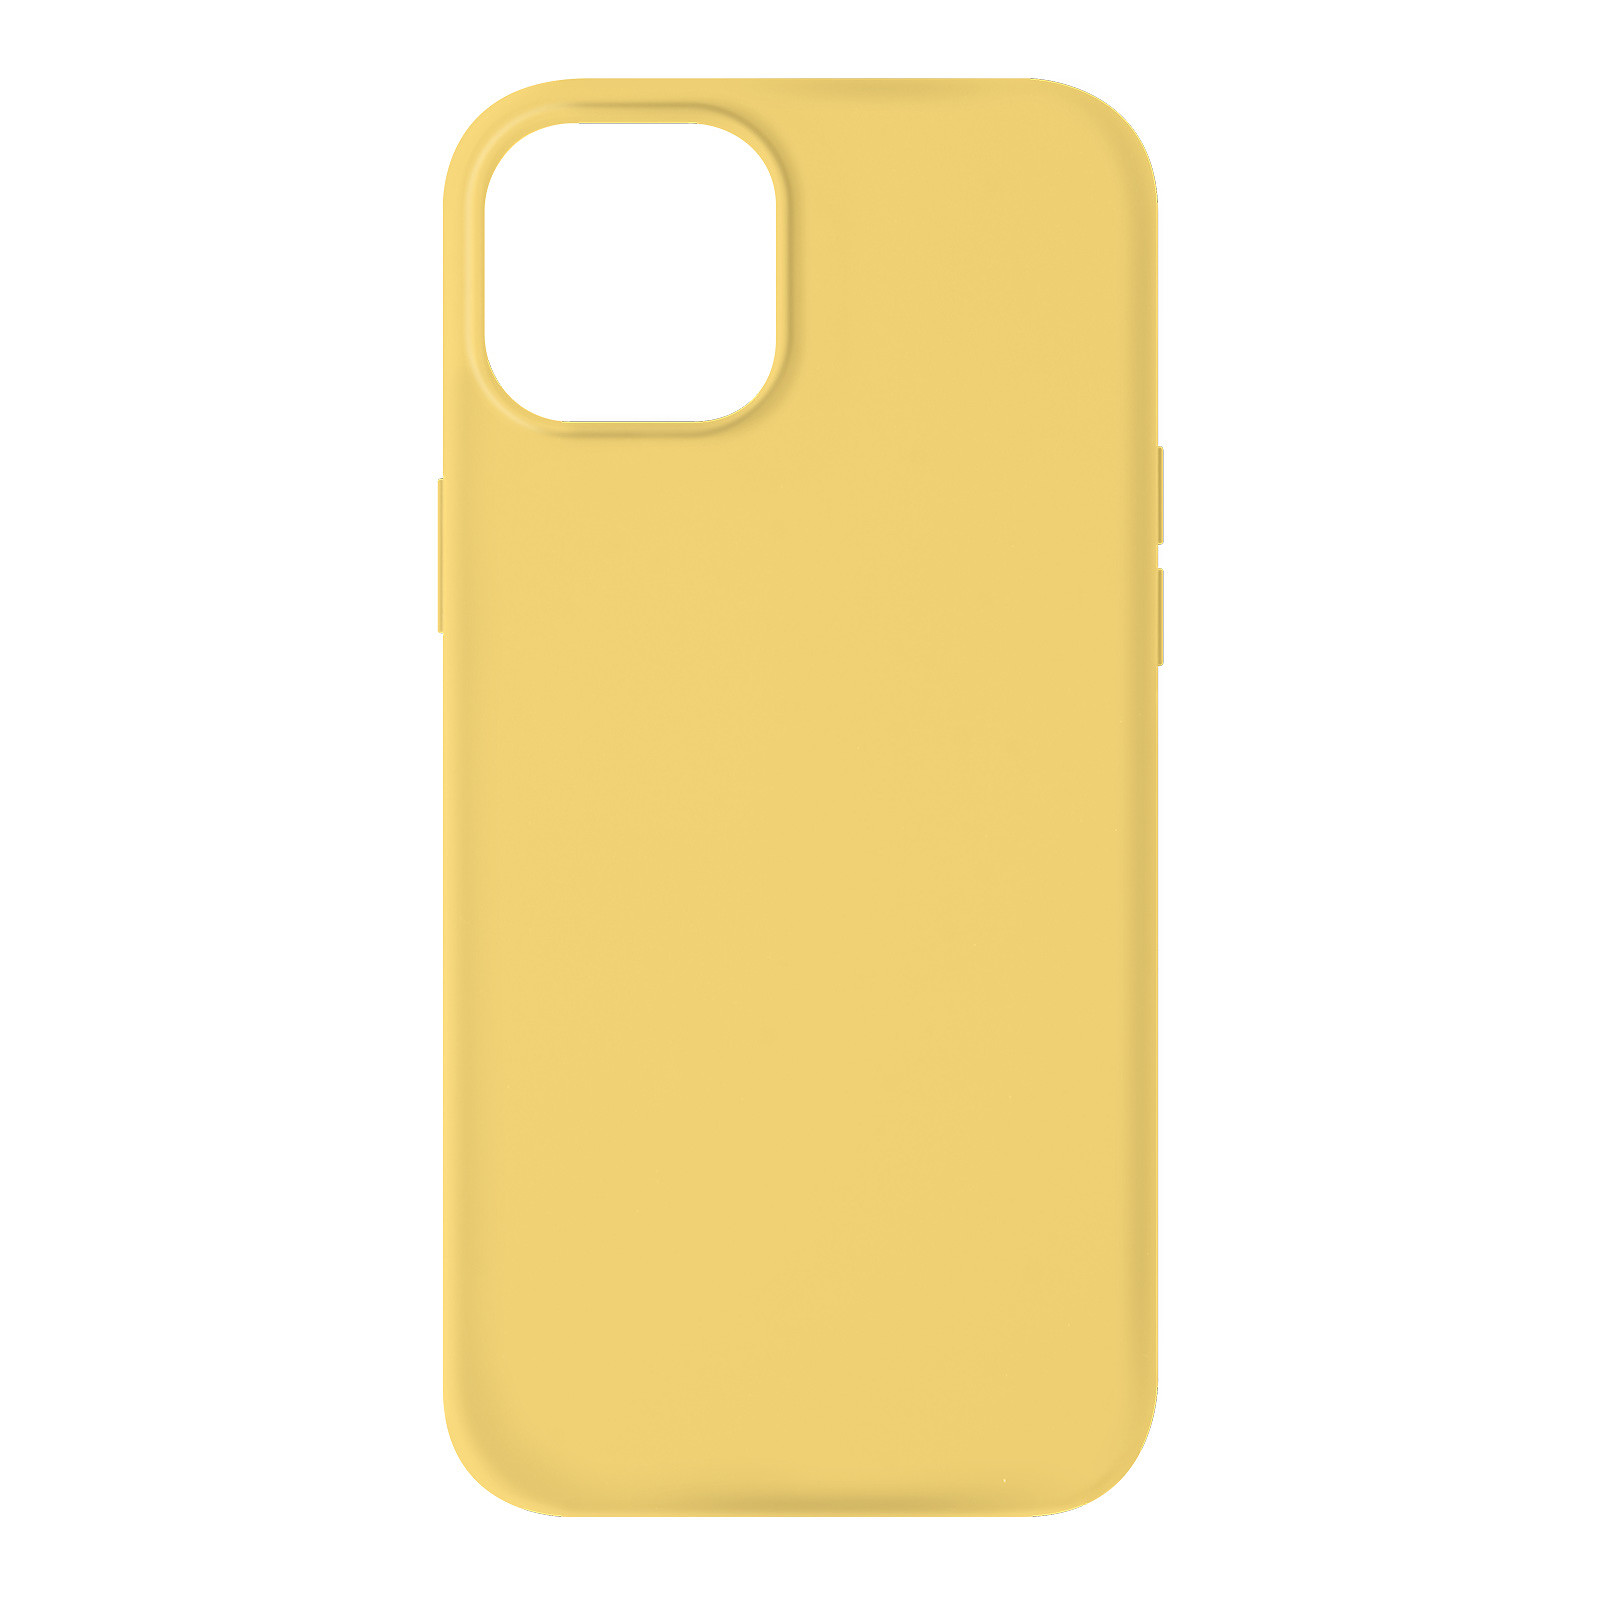 Avizar Coque pour iPhone 13 Silicone Semi-rigide Finition Soft-touch jaune - Coque telephone Avizar